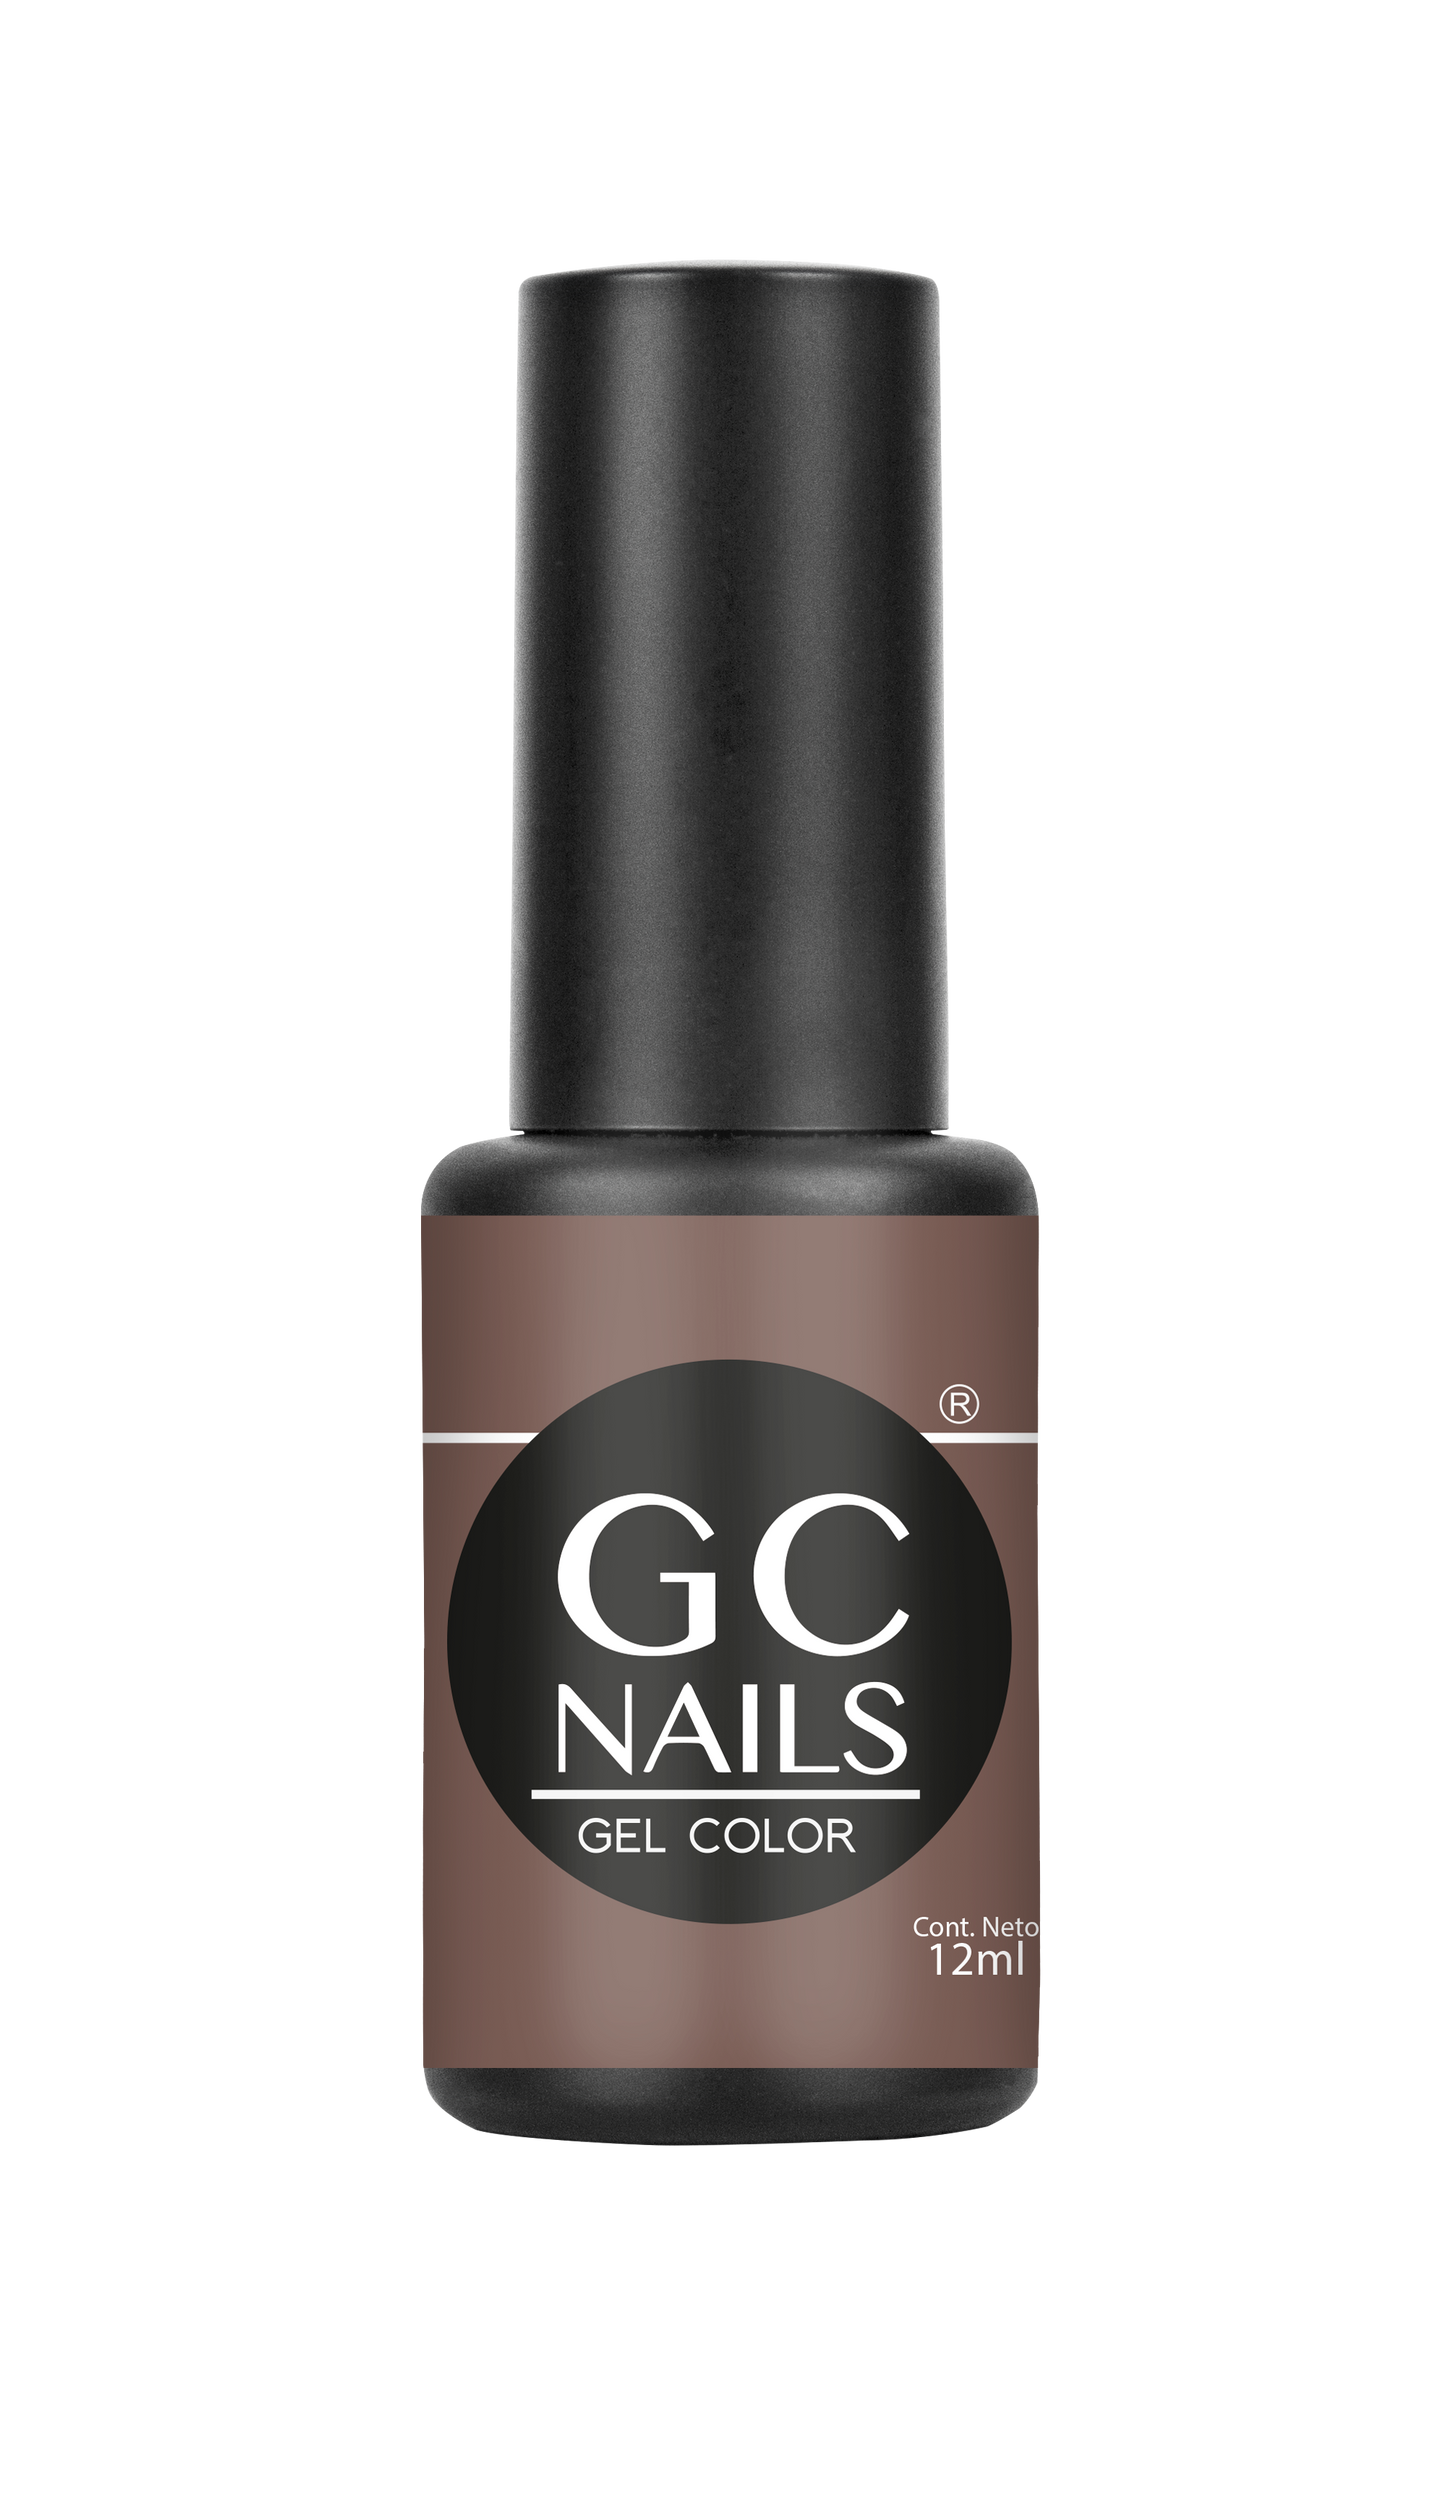 GC nails bel-color 12ml EXPRESSO 90